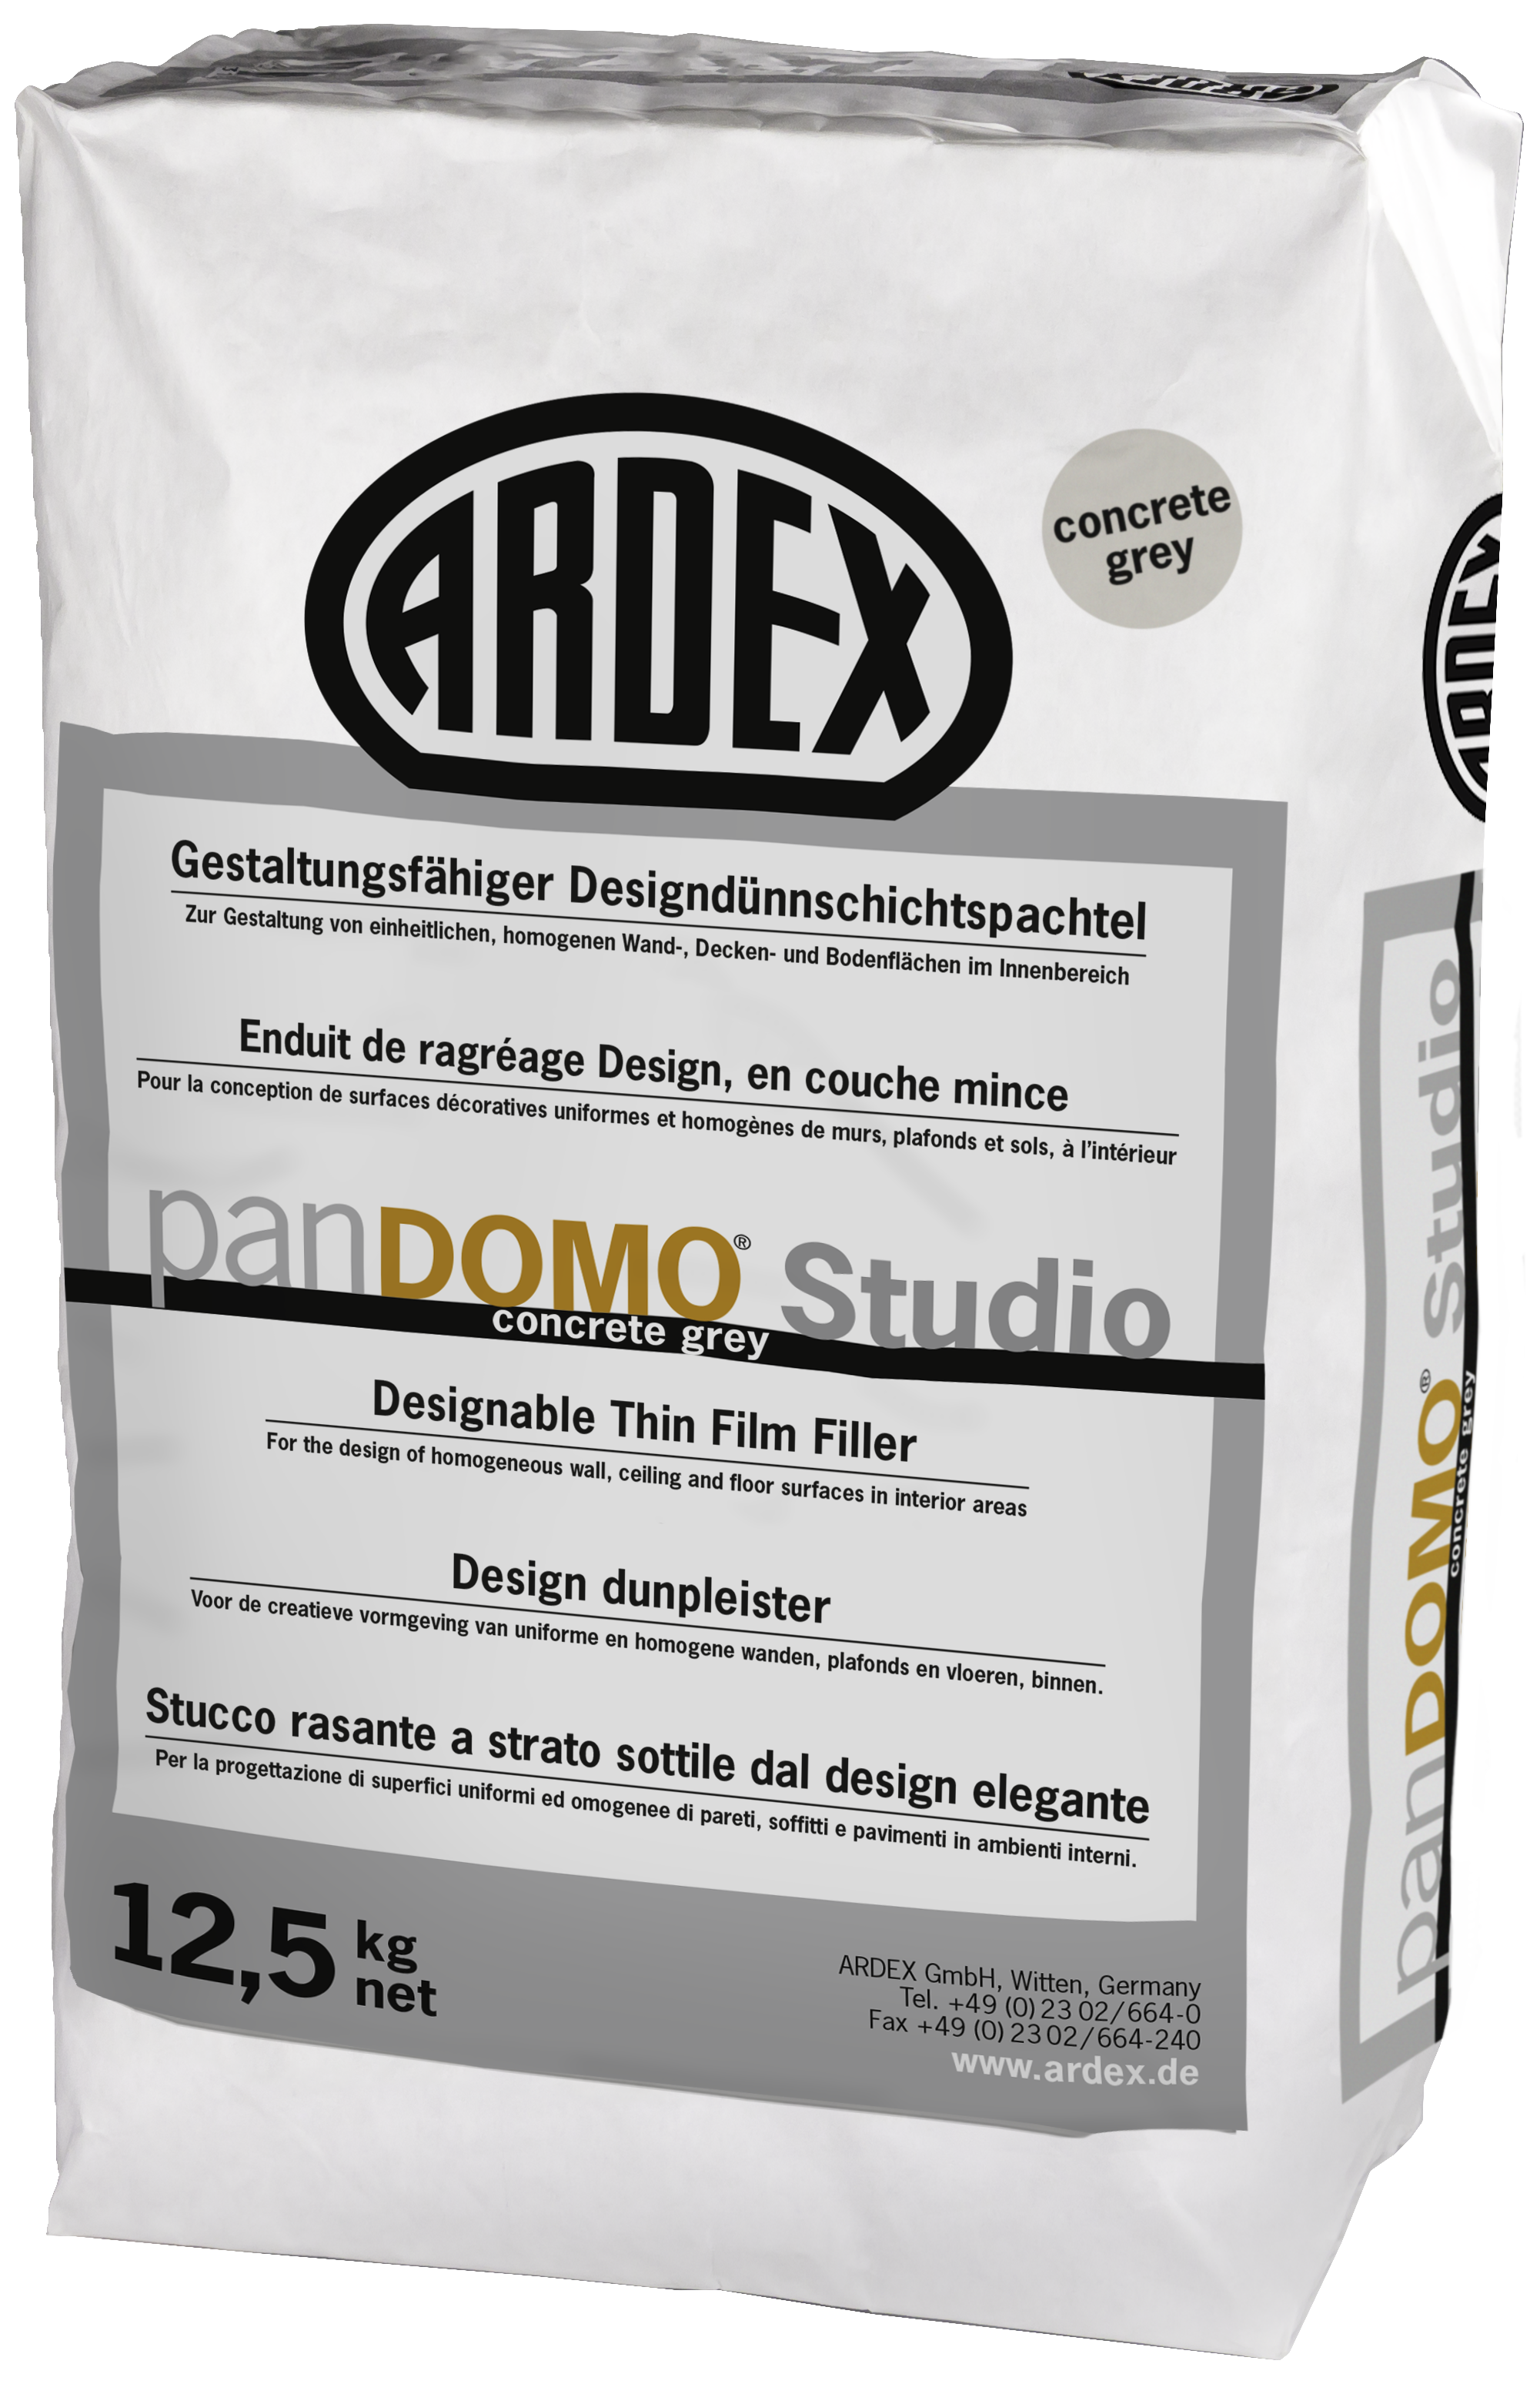 [Translate to BeNeLux-fr:] PANDOMO® Studio concrete grey